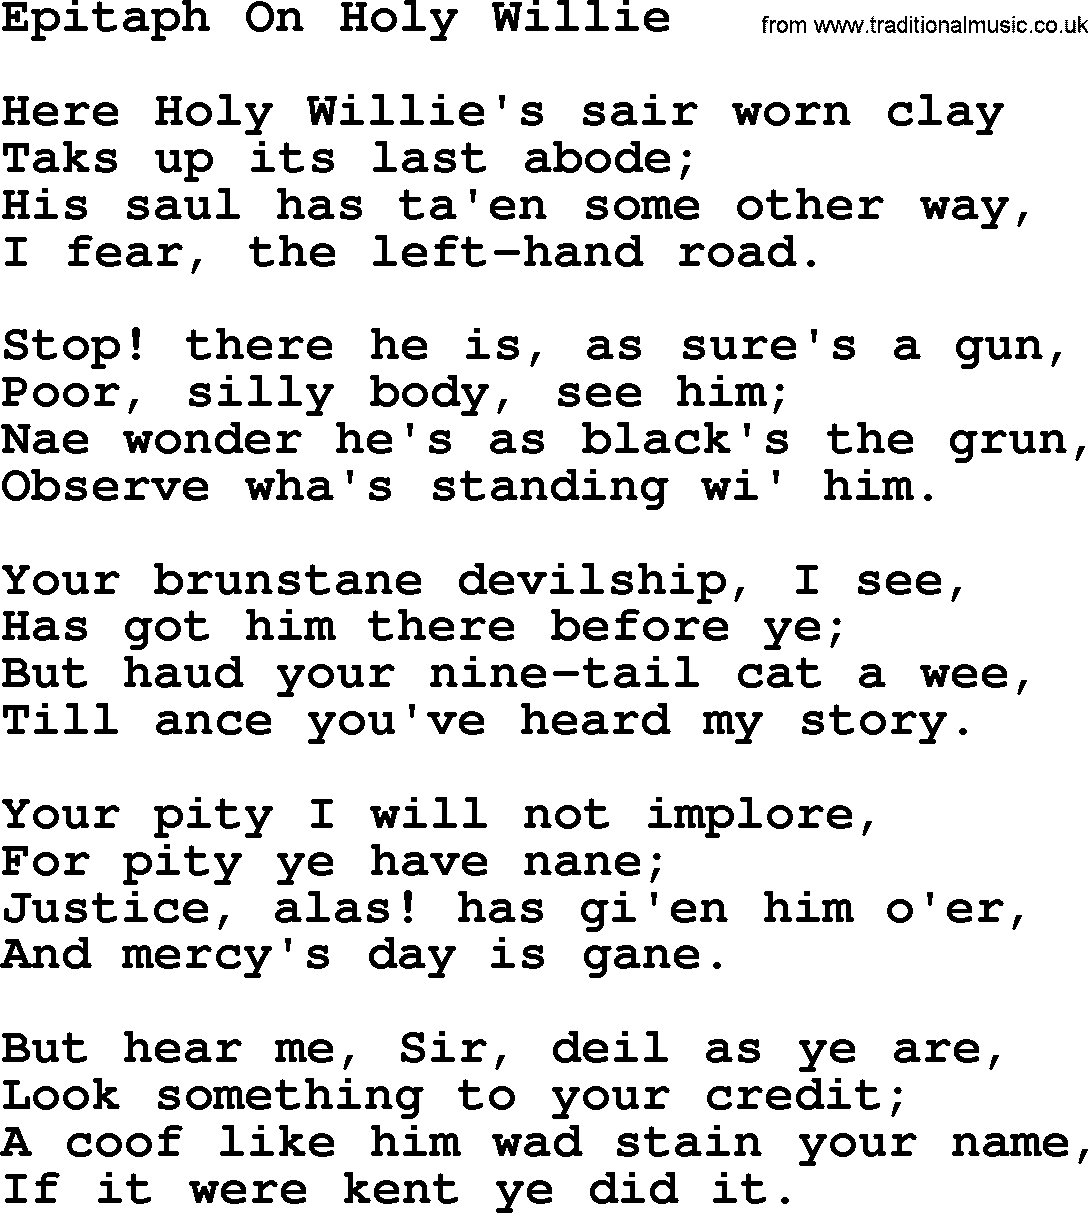 Robert Burns Songs & Lyrics: Epitaph On Holy Willie